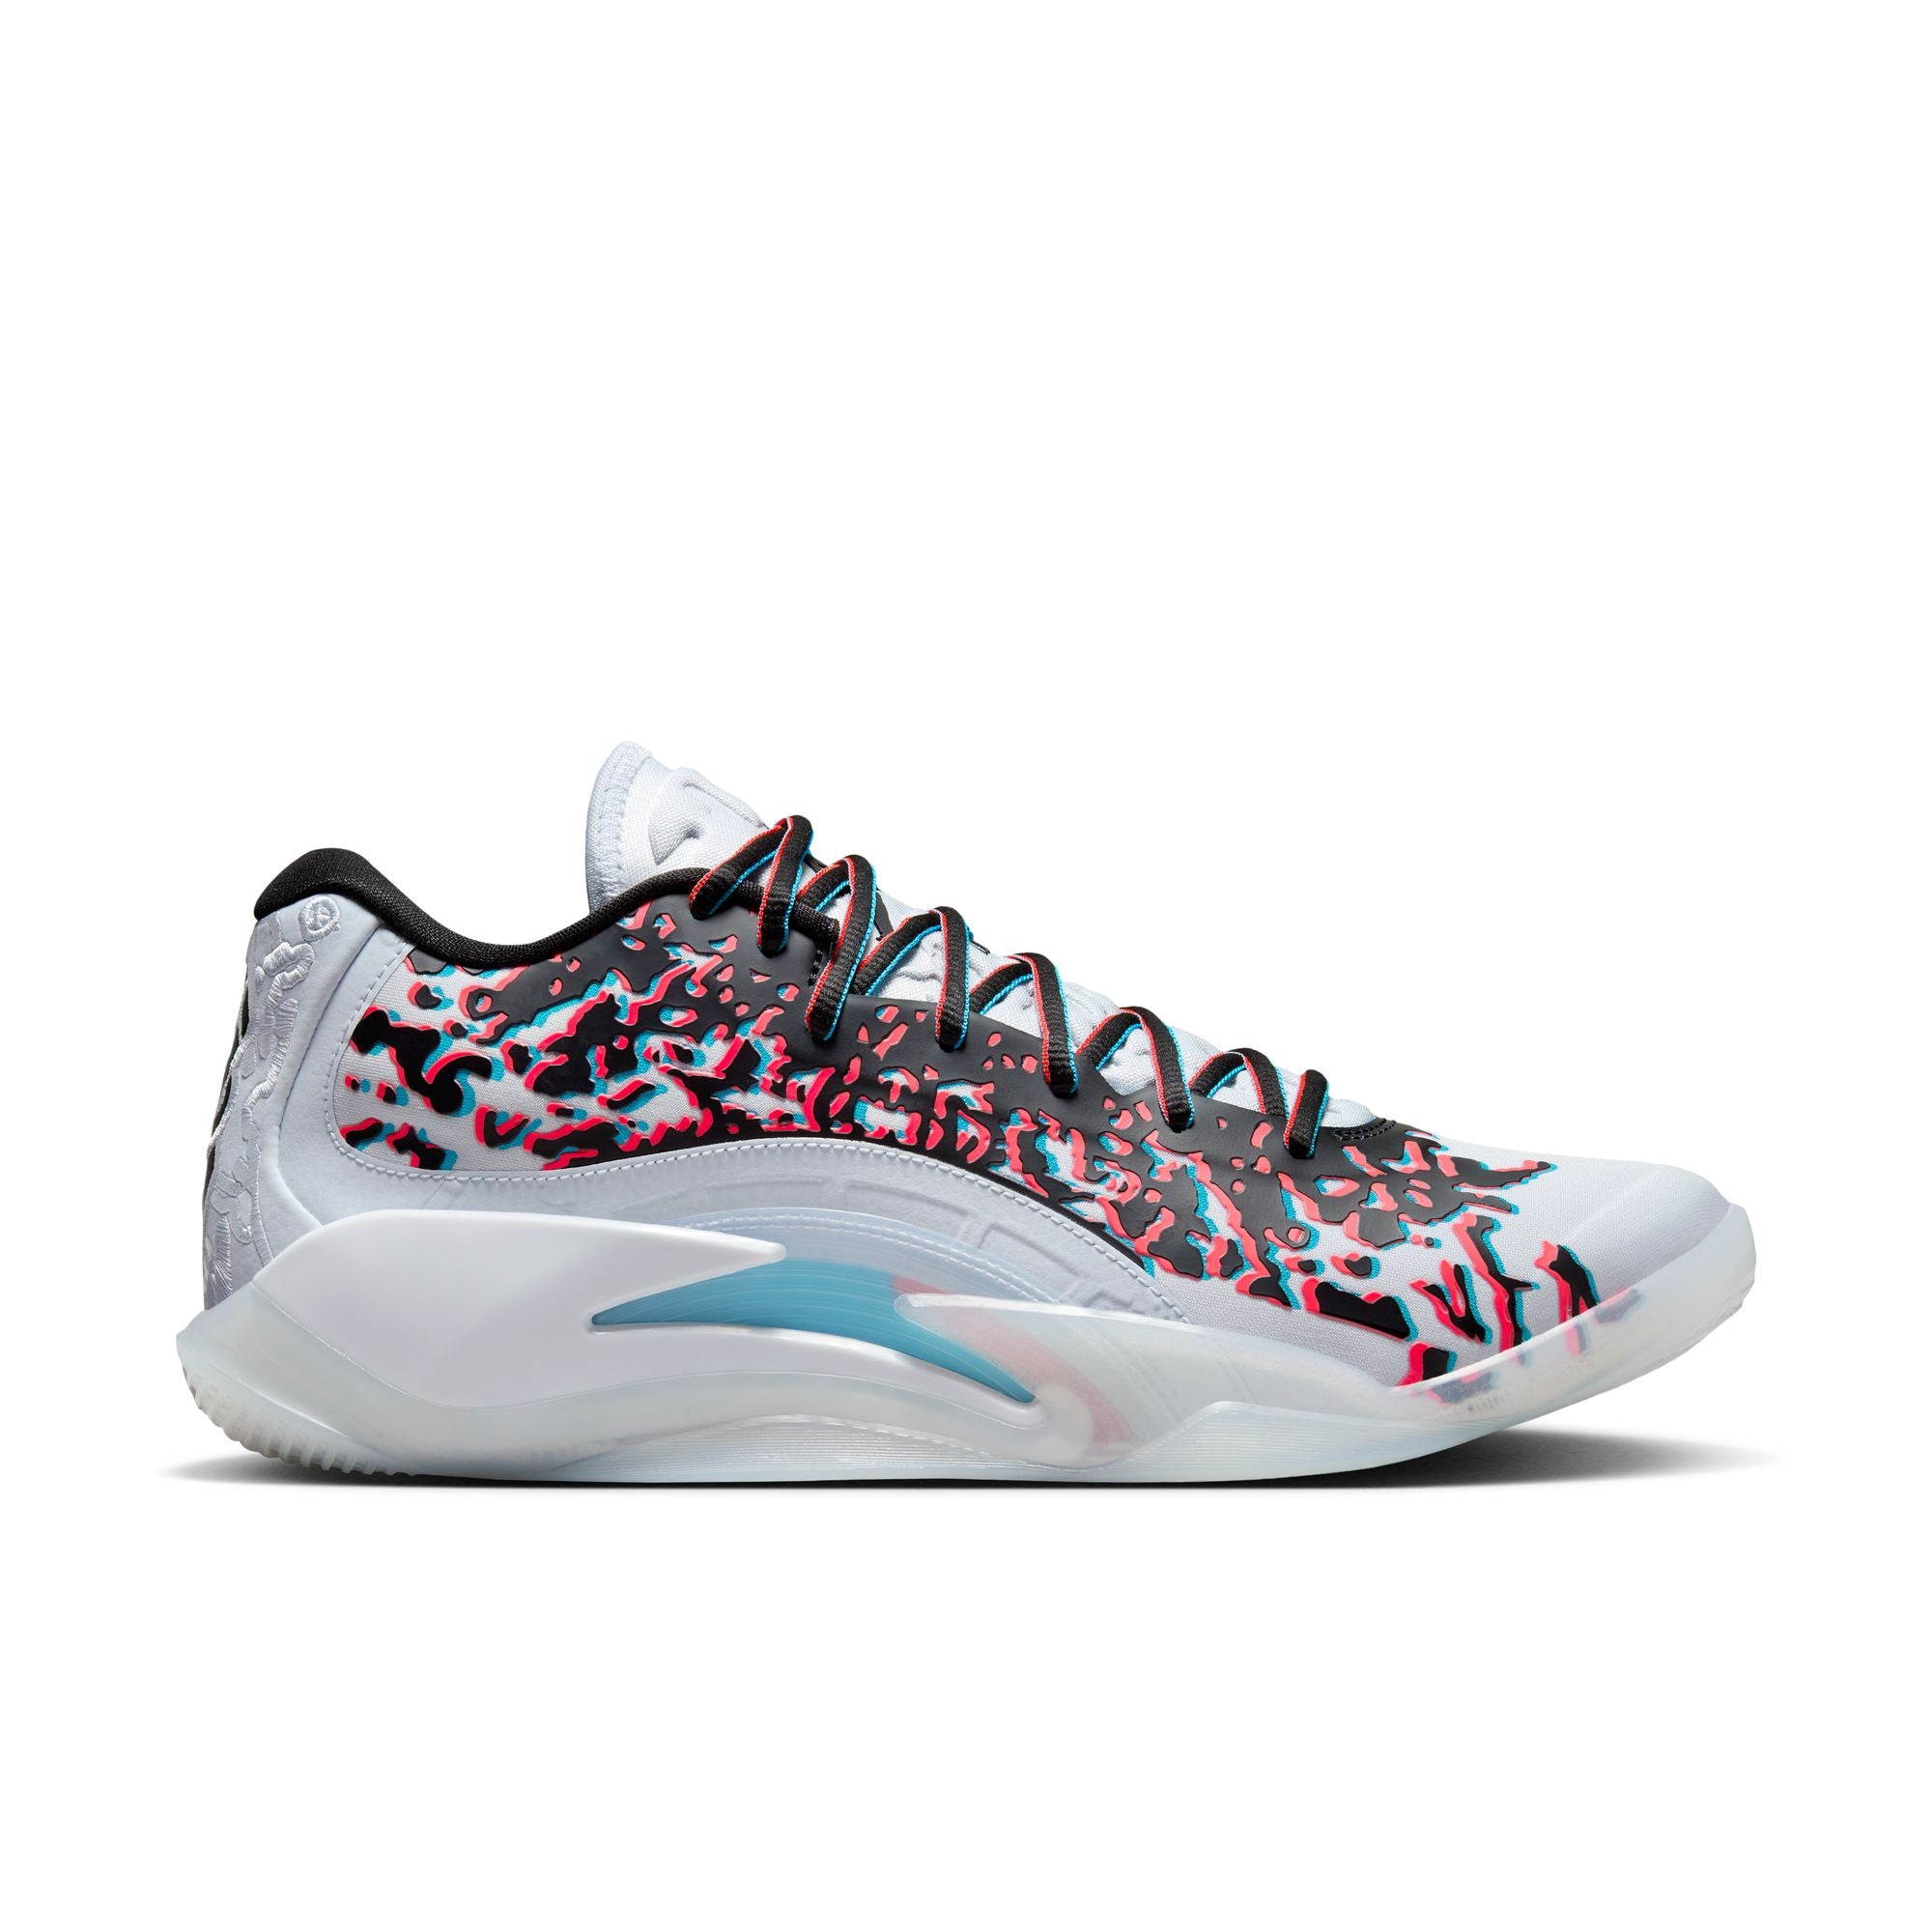 Jordan Zion 3 NRG “3D” Basketball Shoes